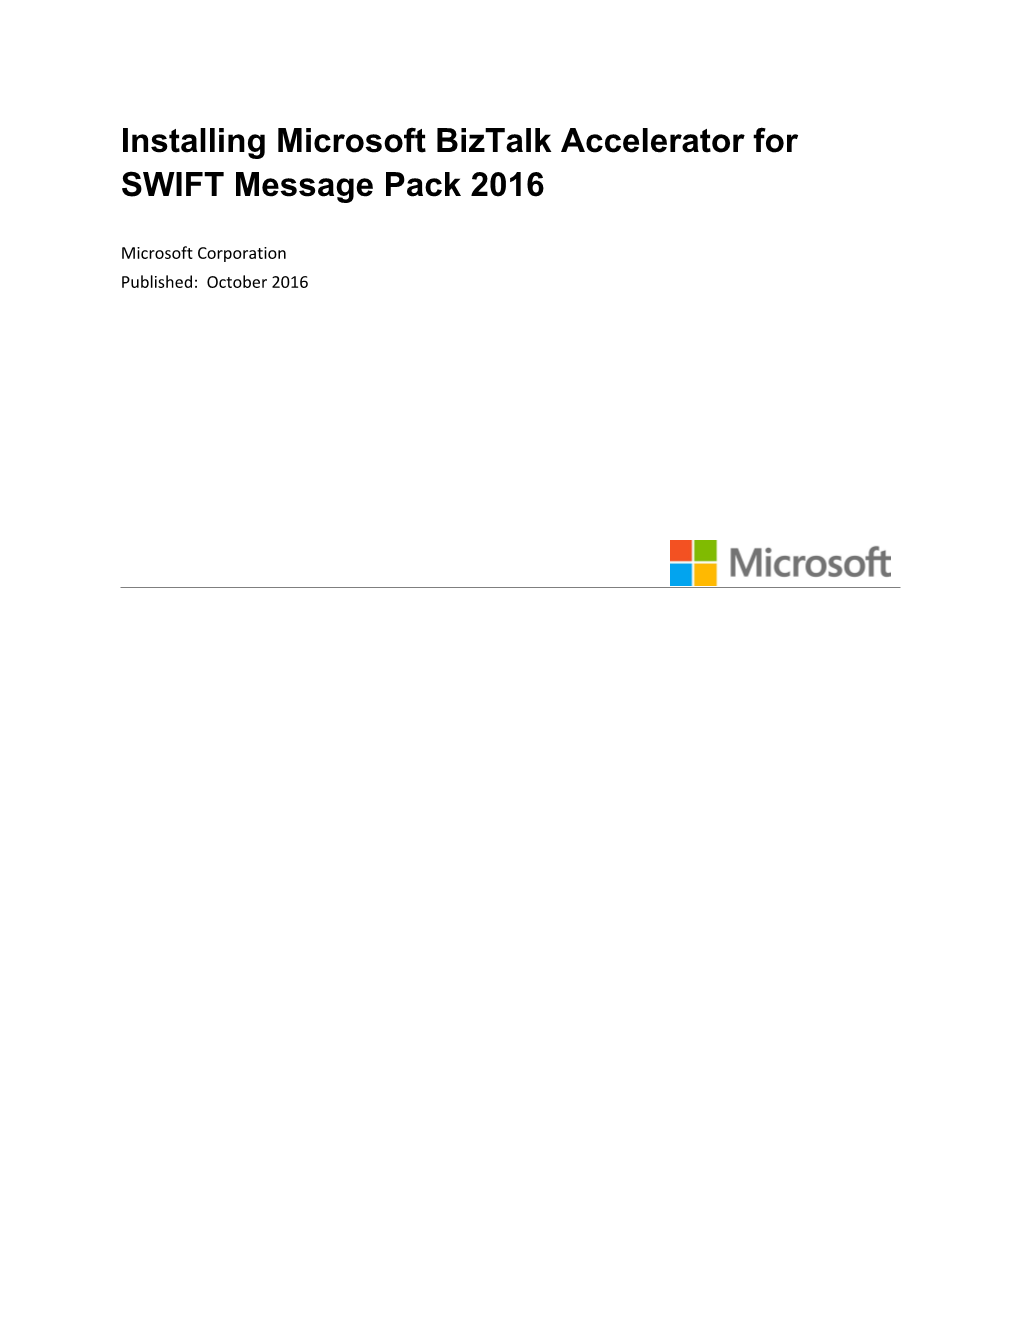 Installing Microsoft Biztalk Accelerator for SWIFT Message Pack 201 6